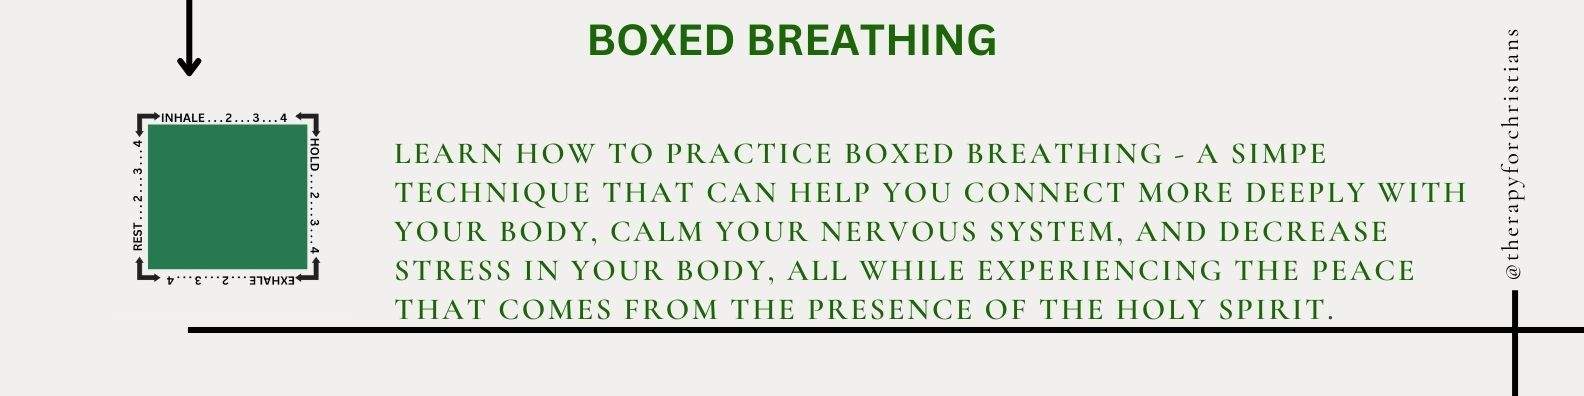 box breathing 